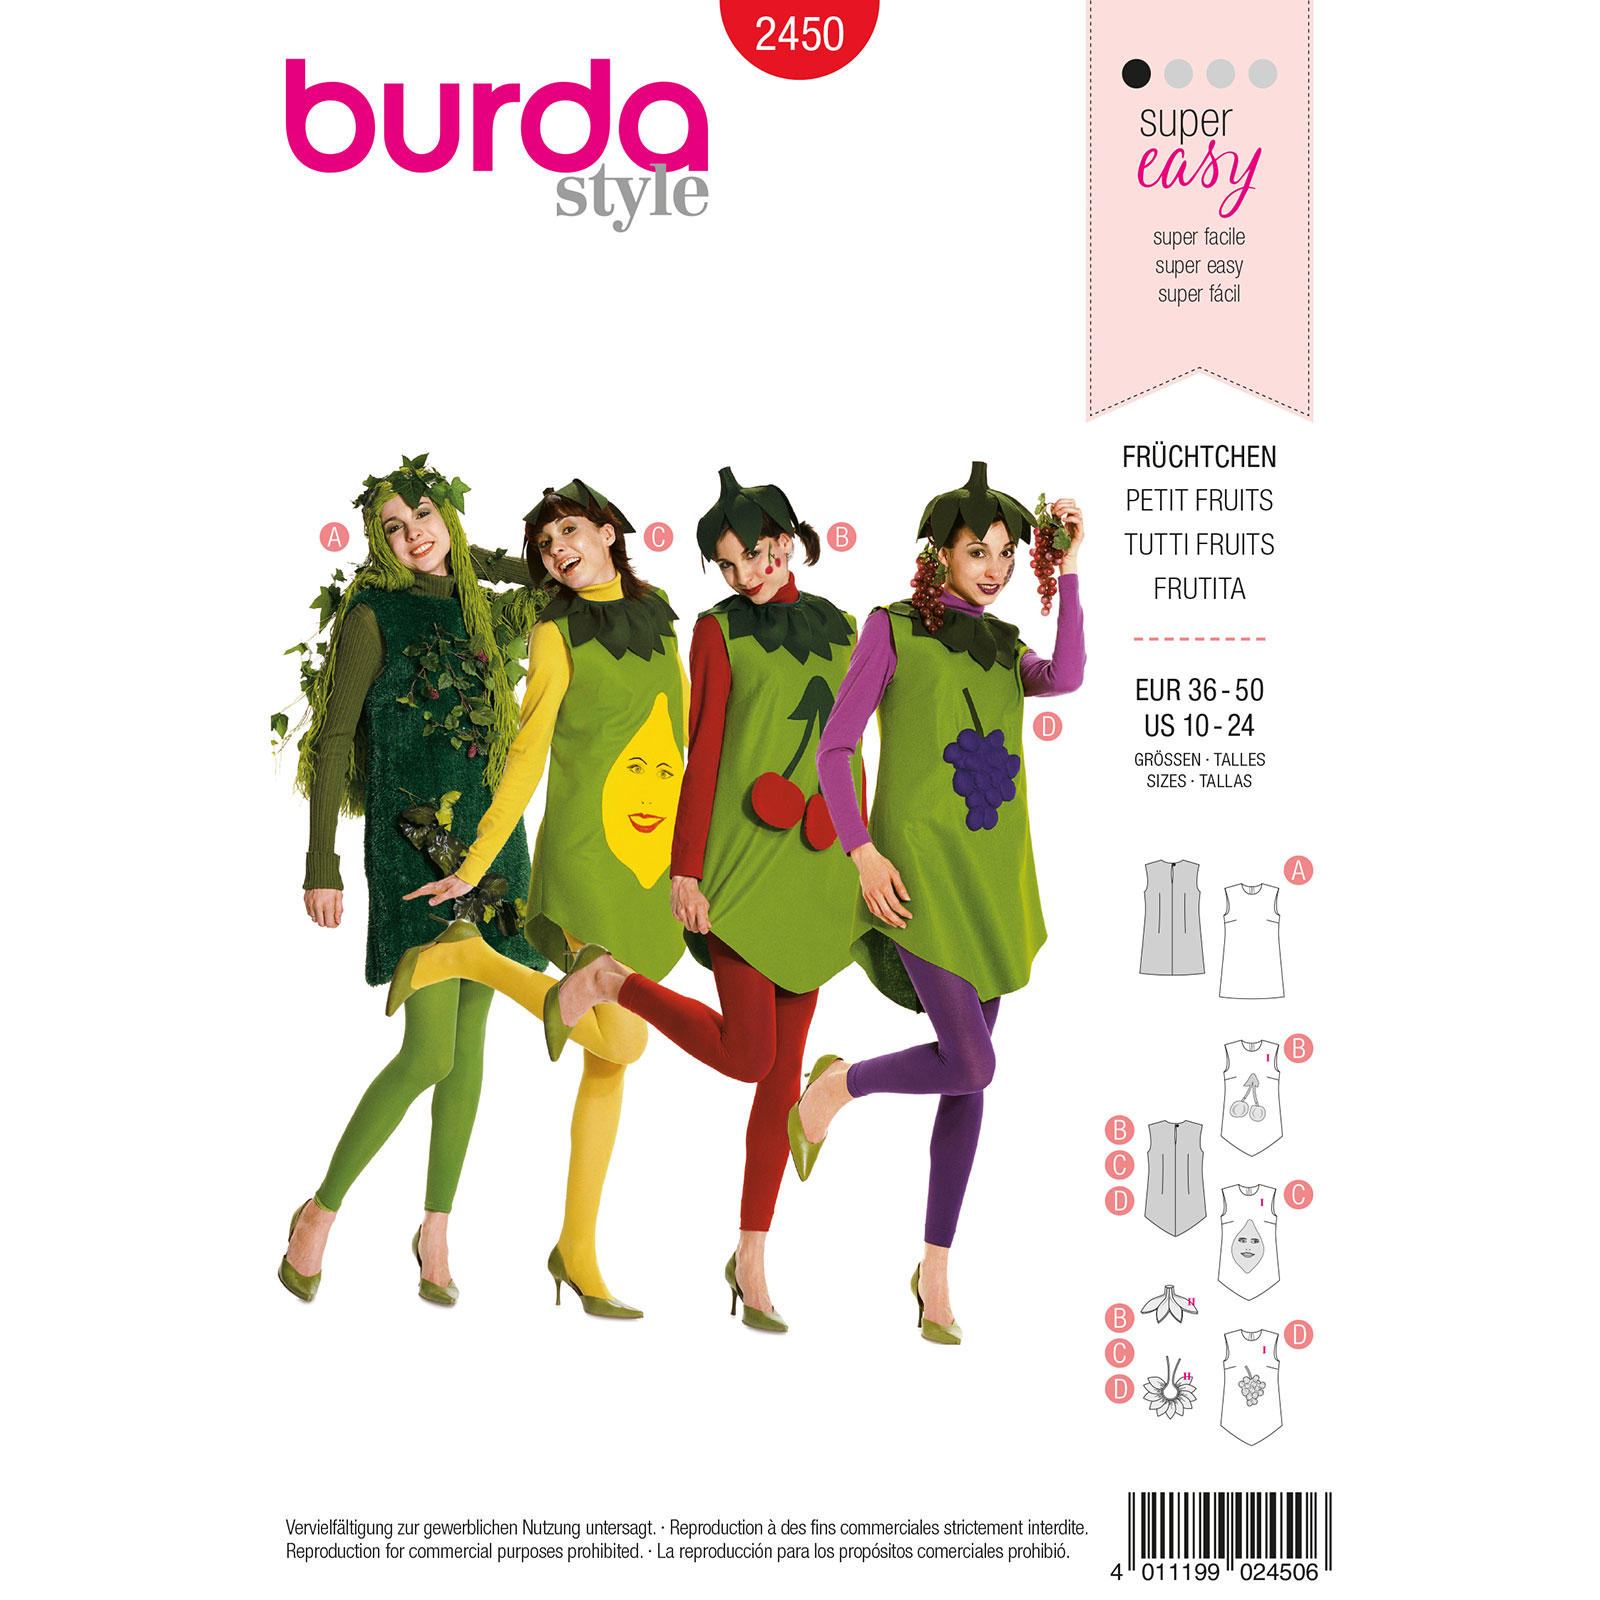 Burda Rood 2450 - Tutti frutti in variaties